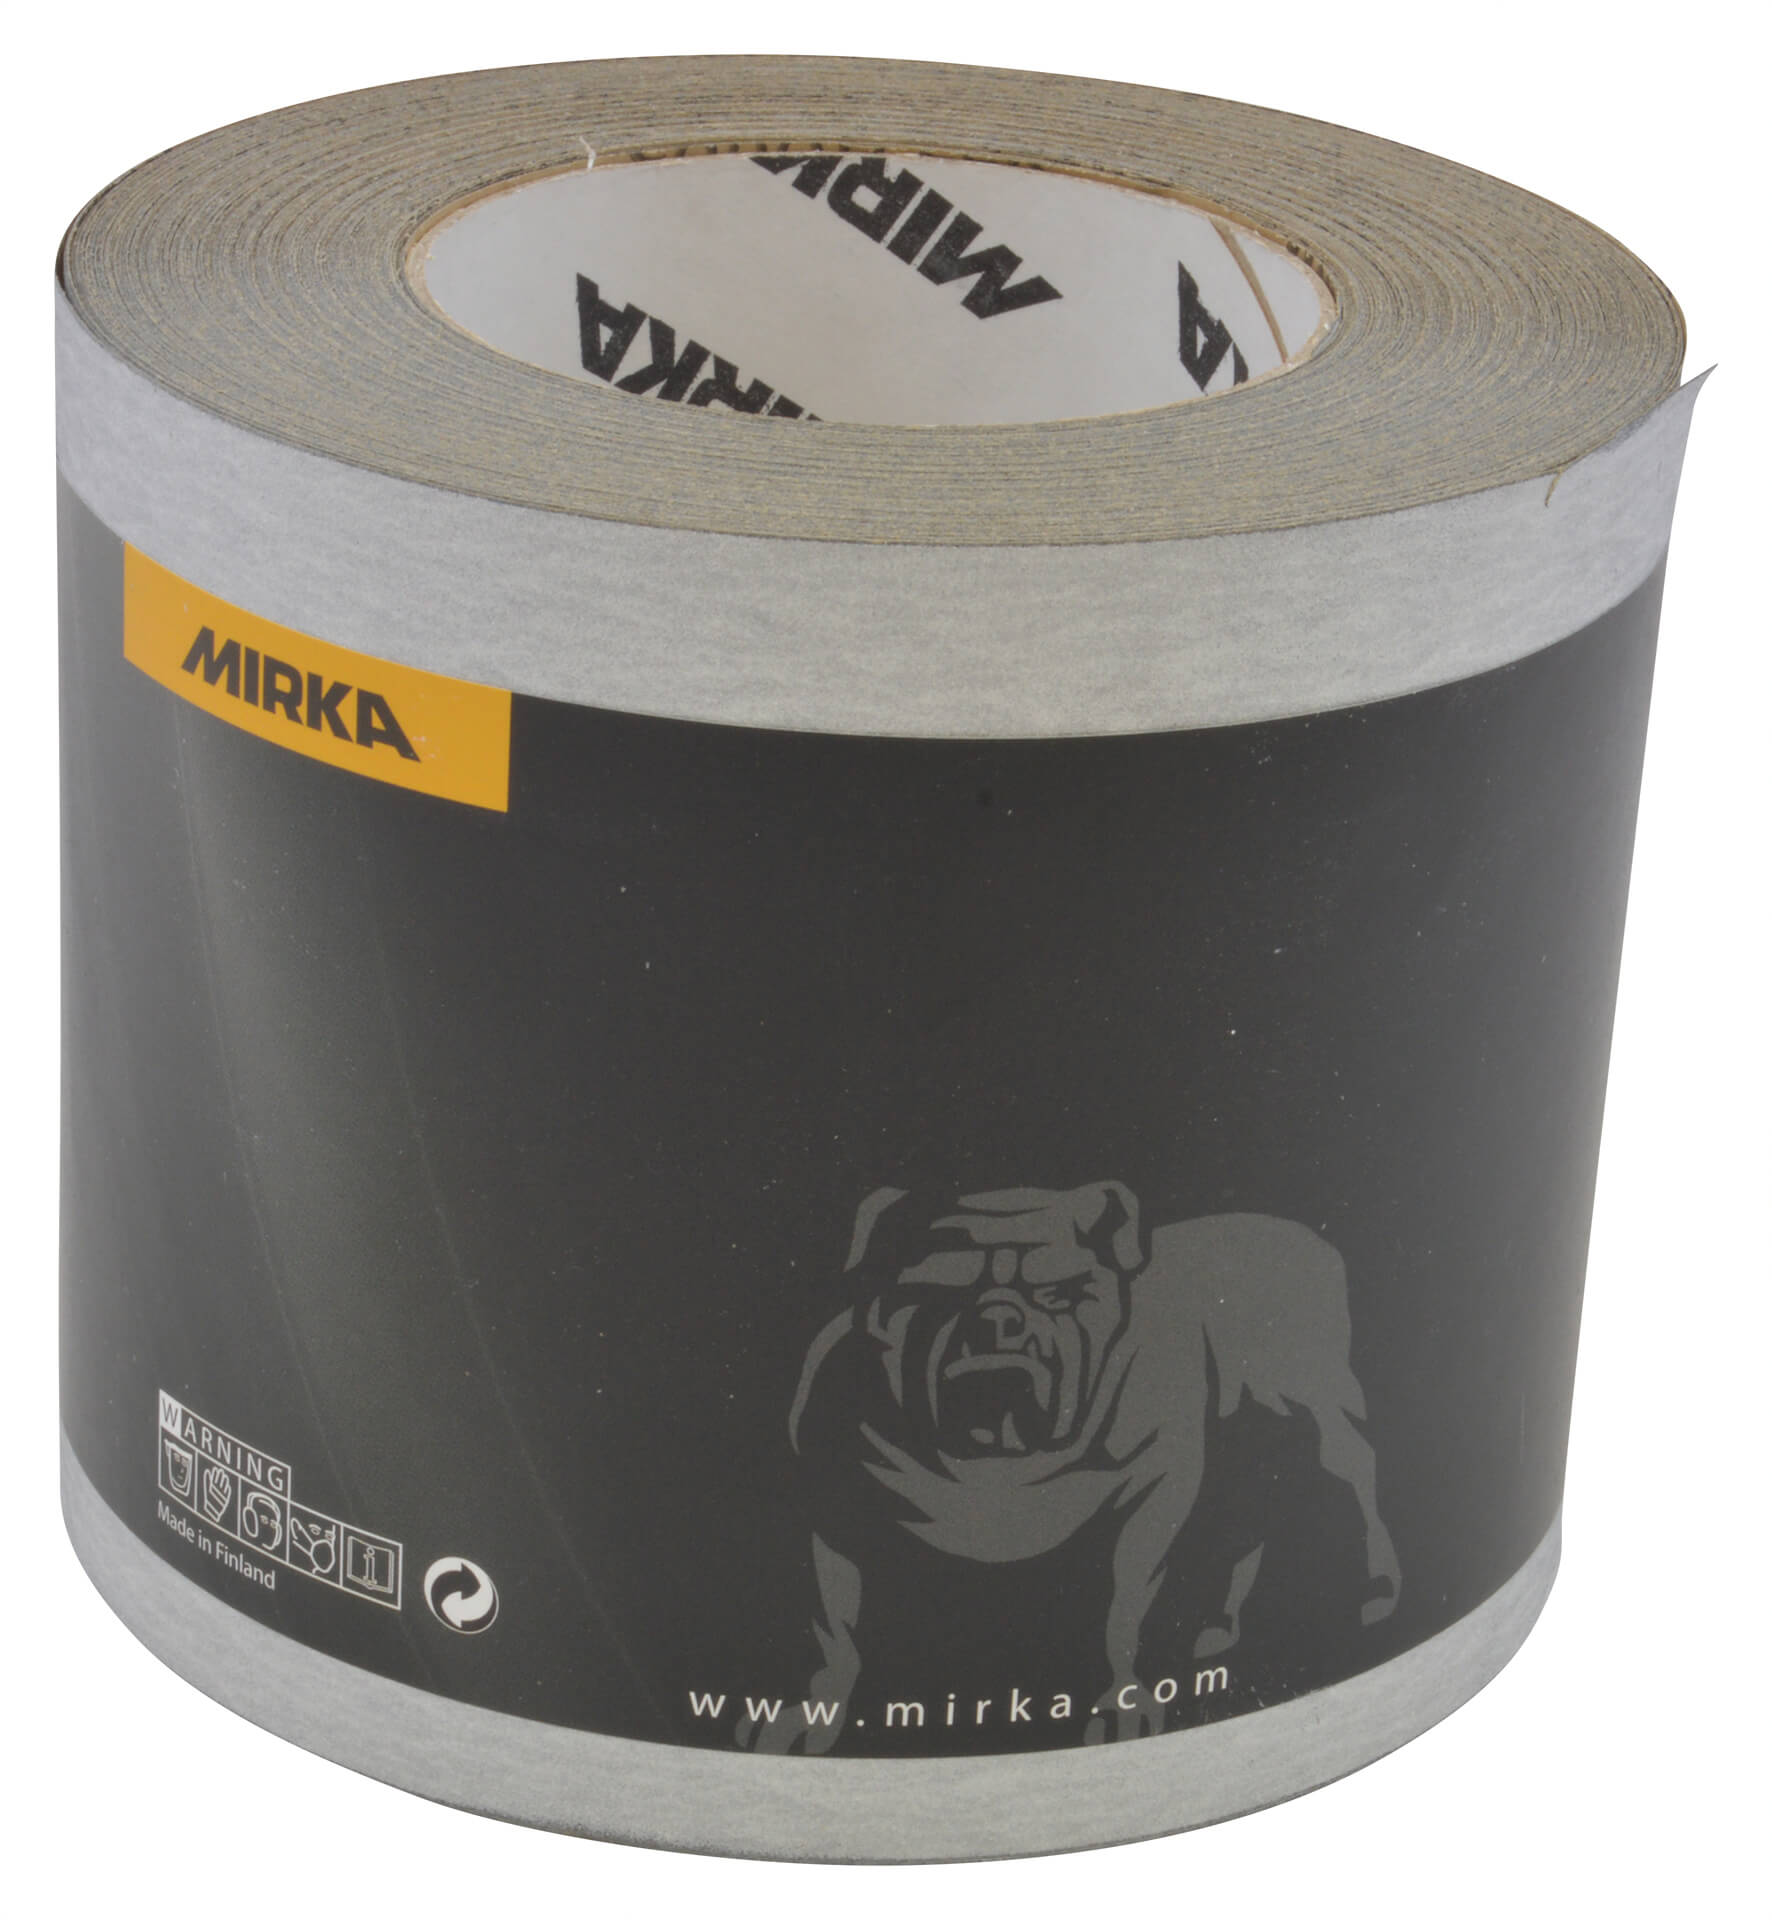 Mirka Abrasive Carat Roll (115mm x 50M) - 400 Grit